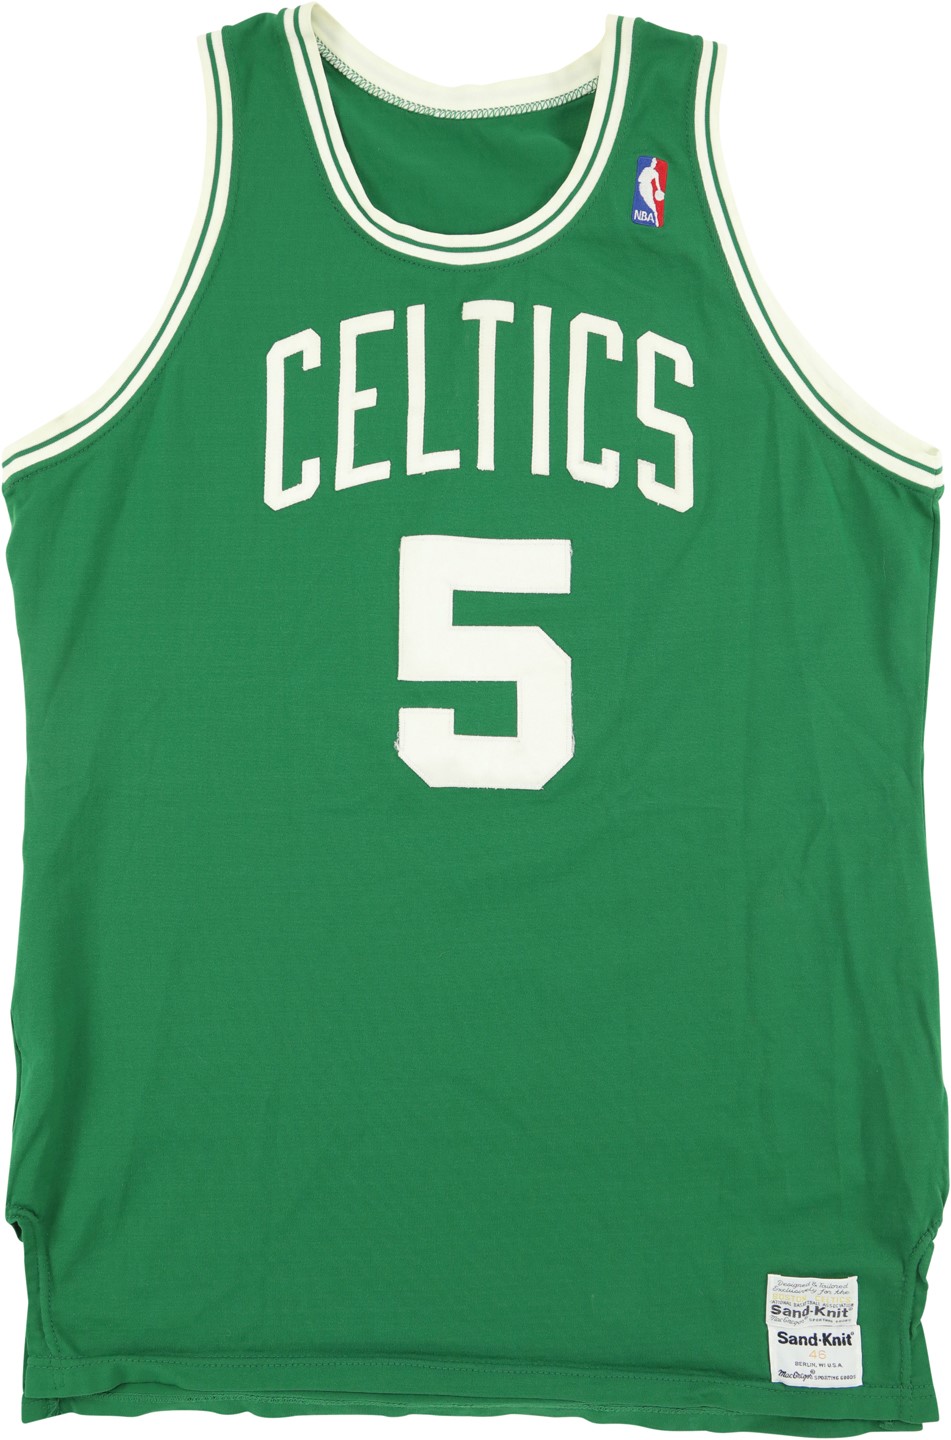 - Circa 1986 Bill Walton Boston Celtics Game Worn Jersey